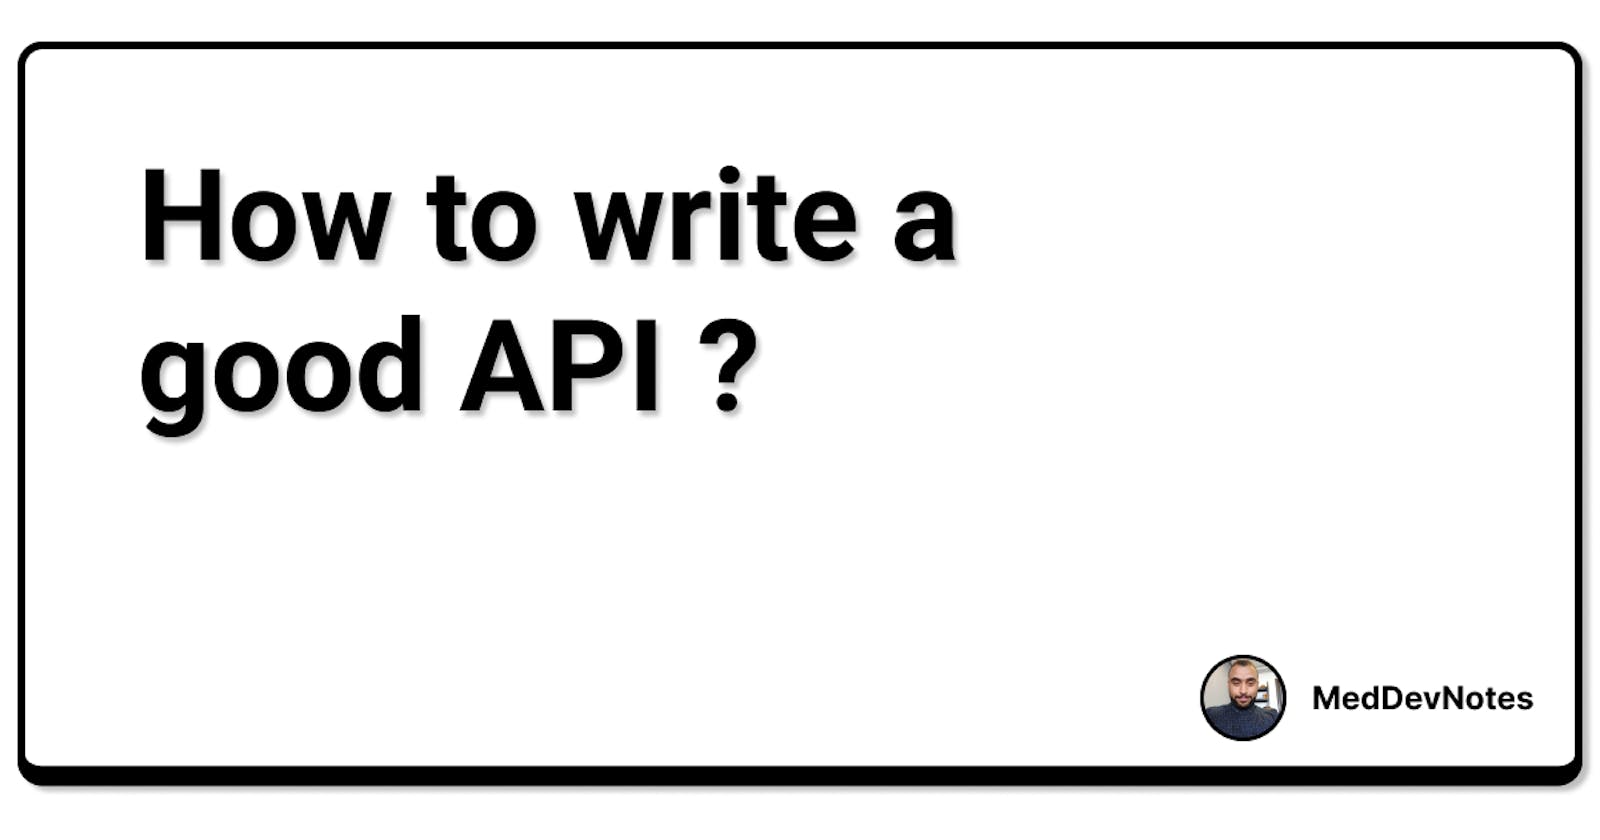 How to write a good API!